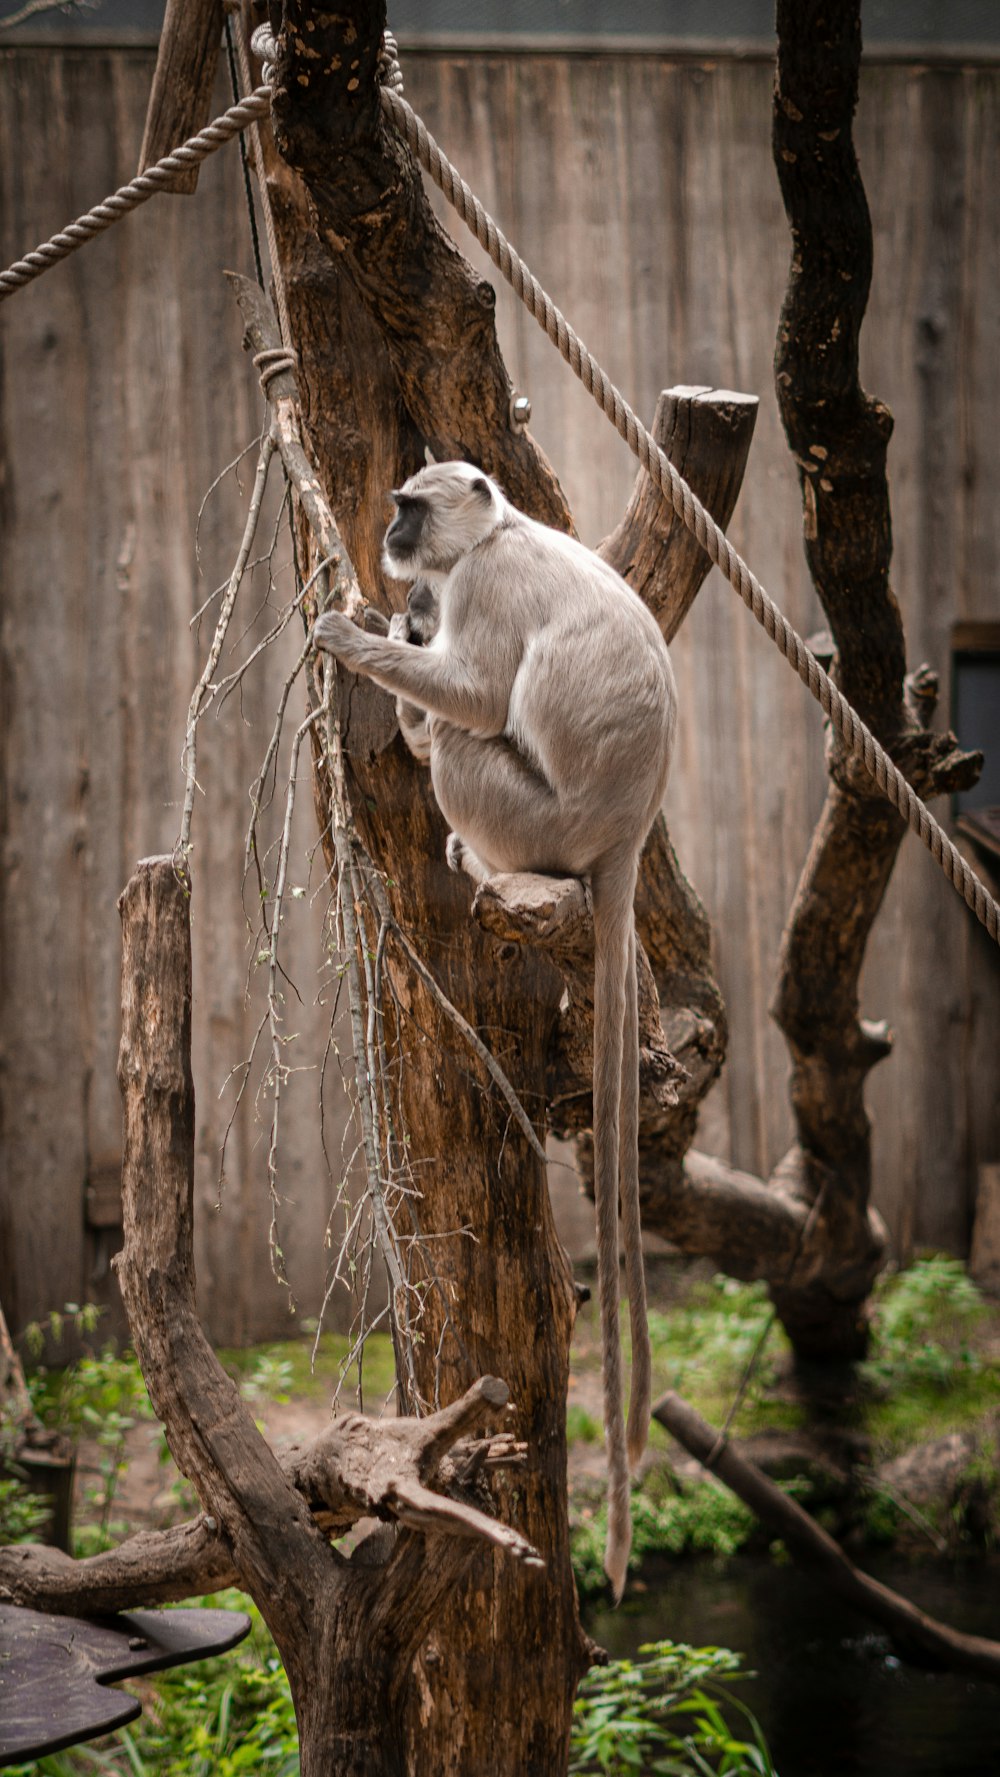 a monkey is sitting on a tree limb